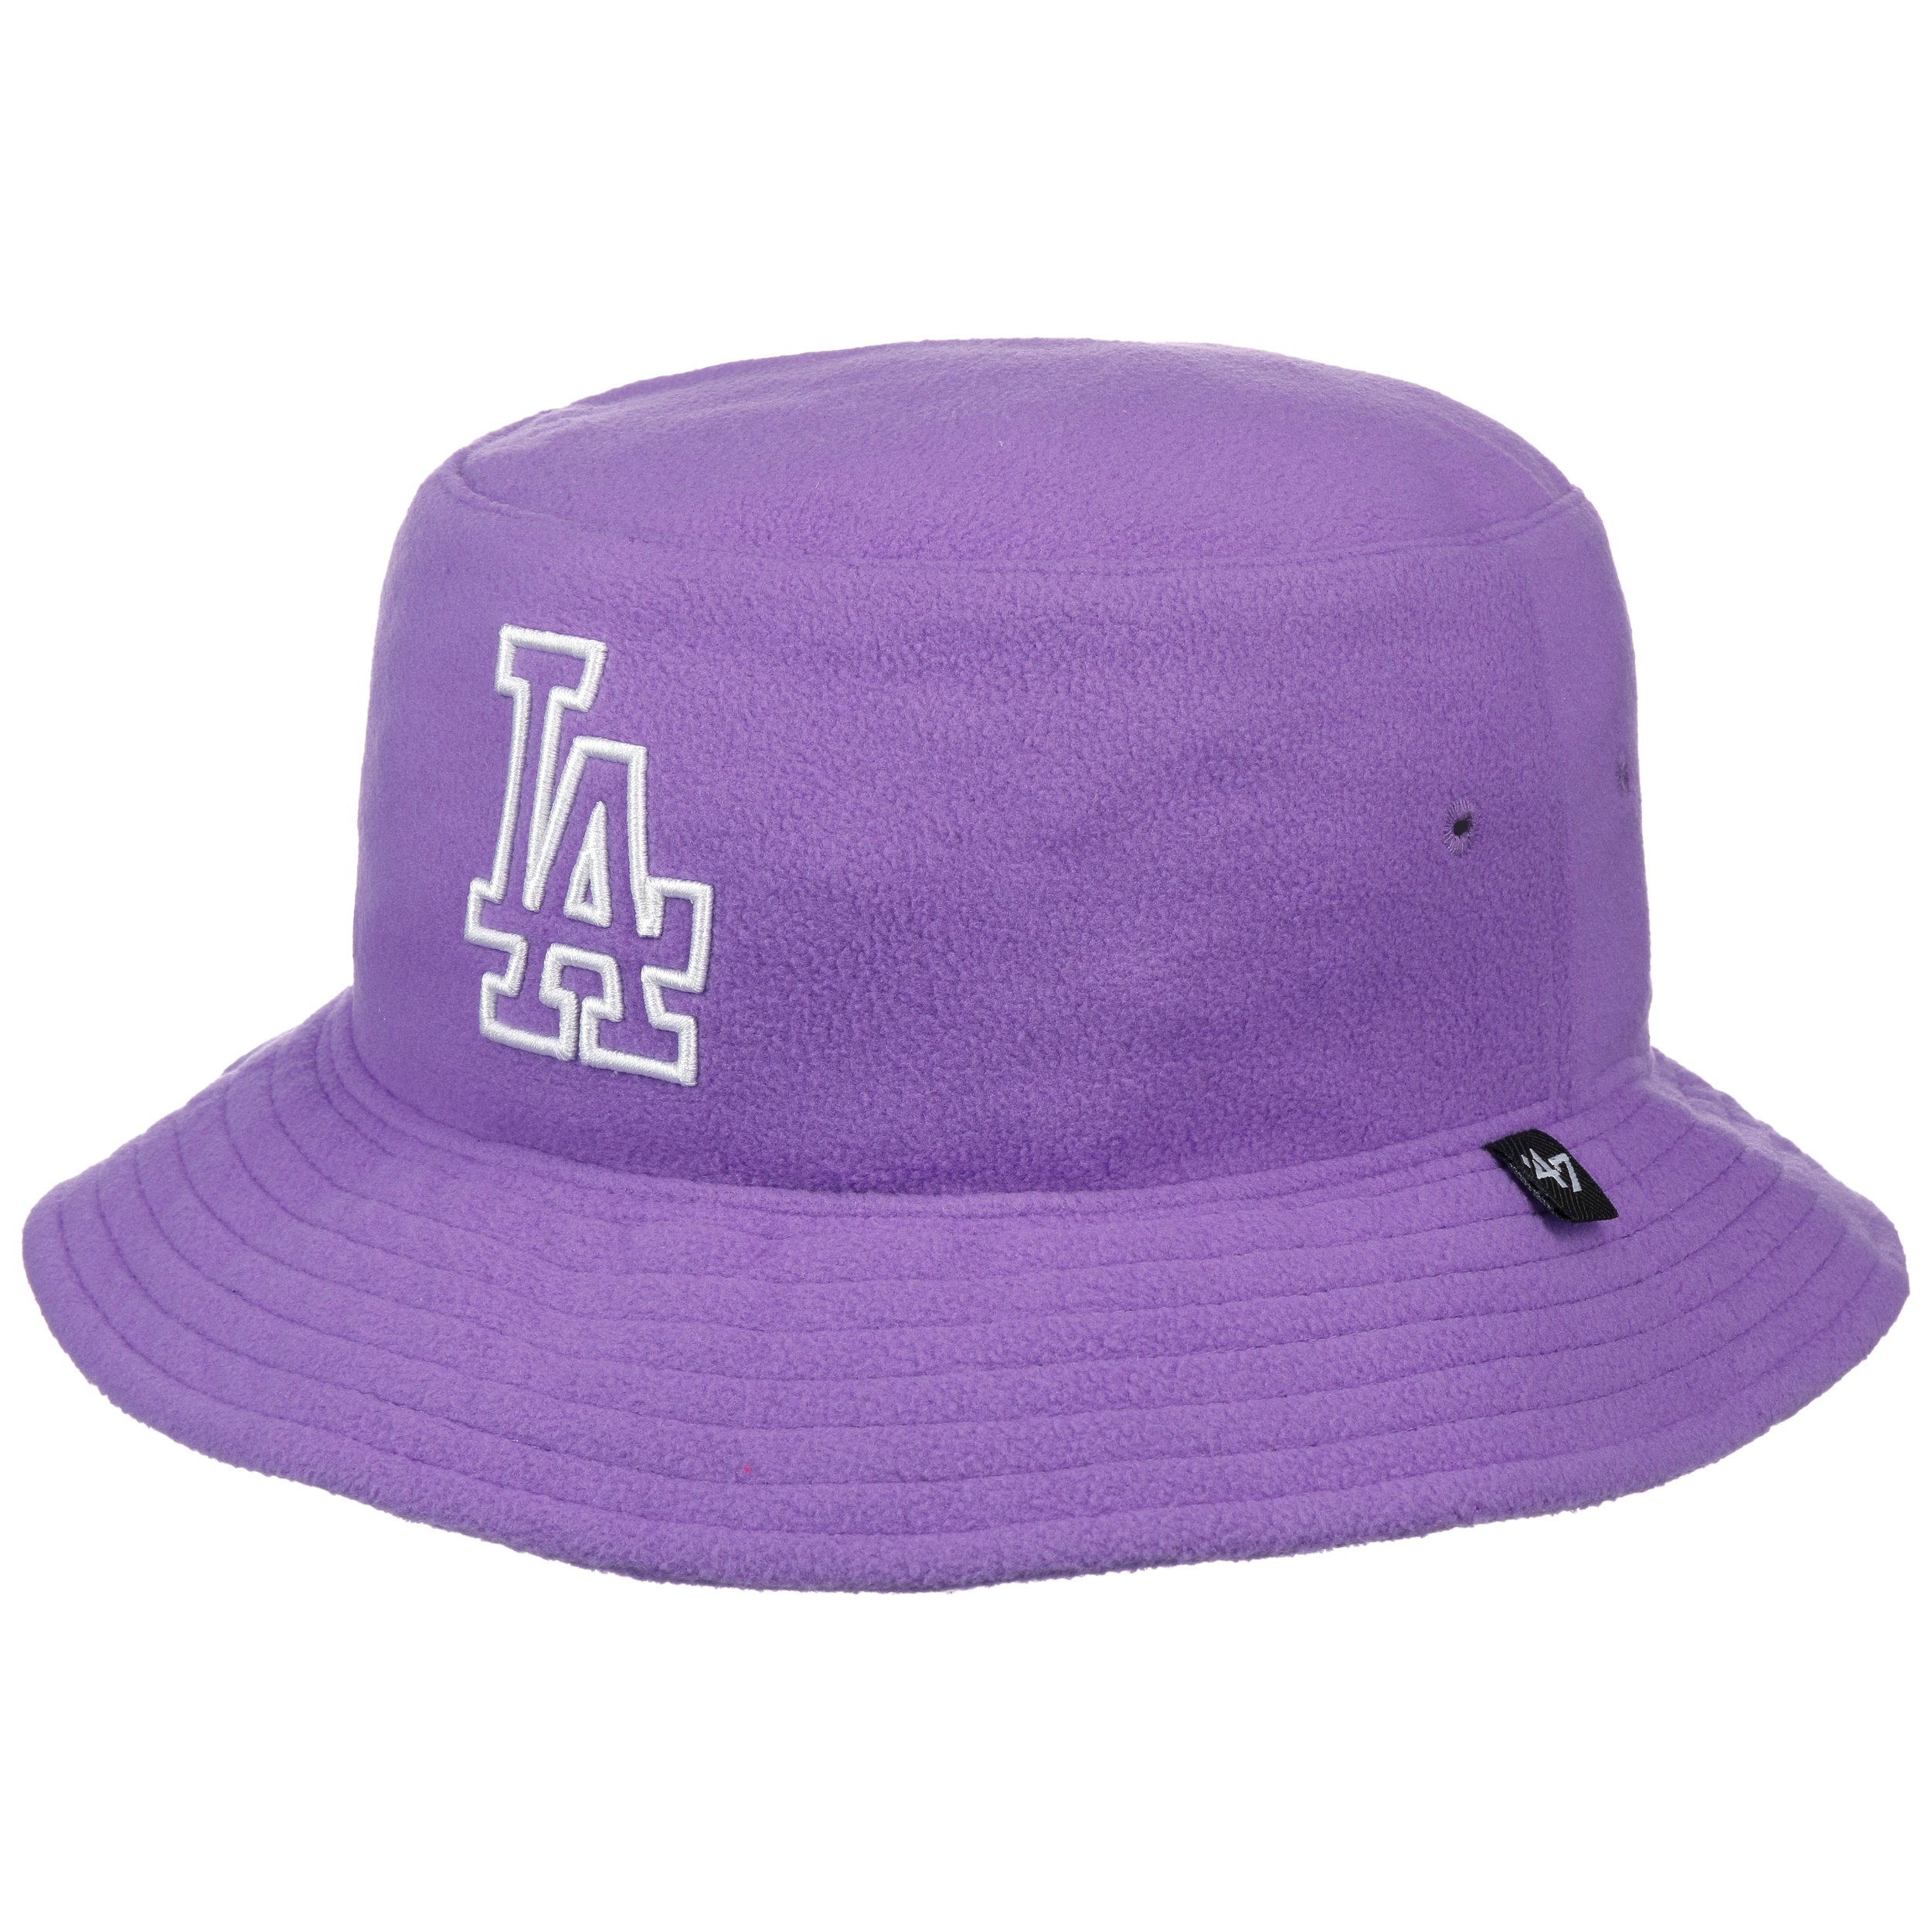 Dodgers Fleece Bucket Hat by 47 Brand - 28,95 €